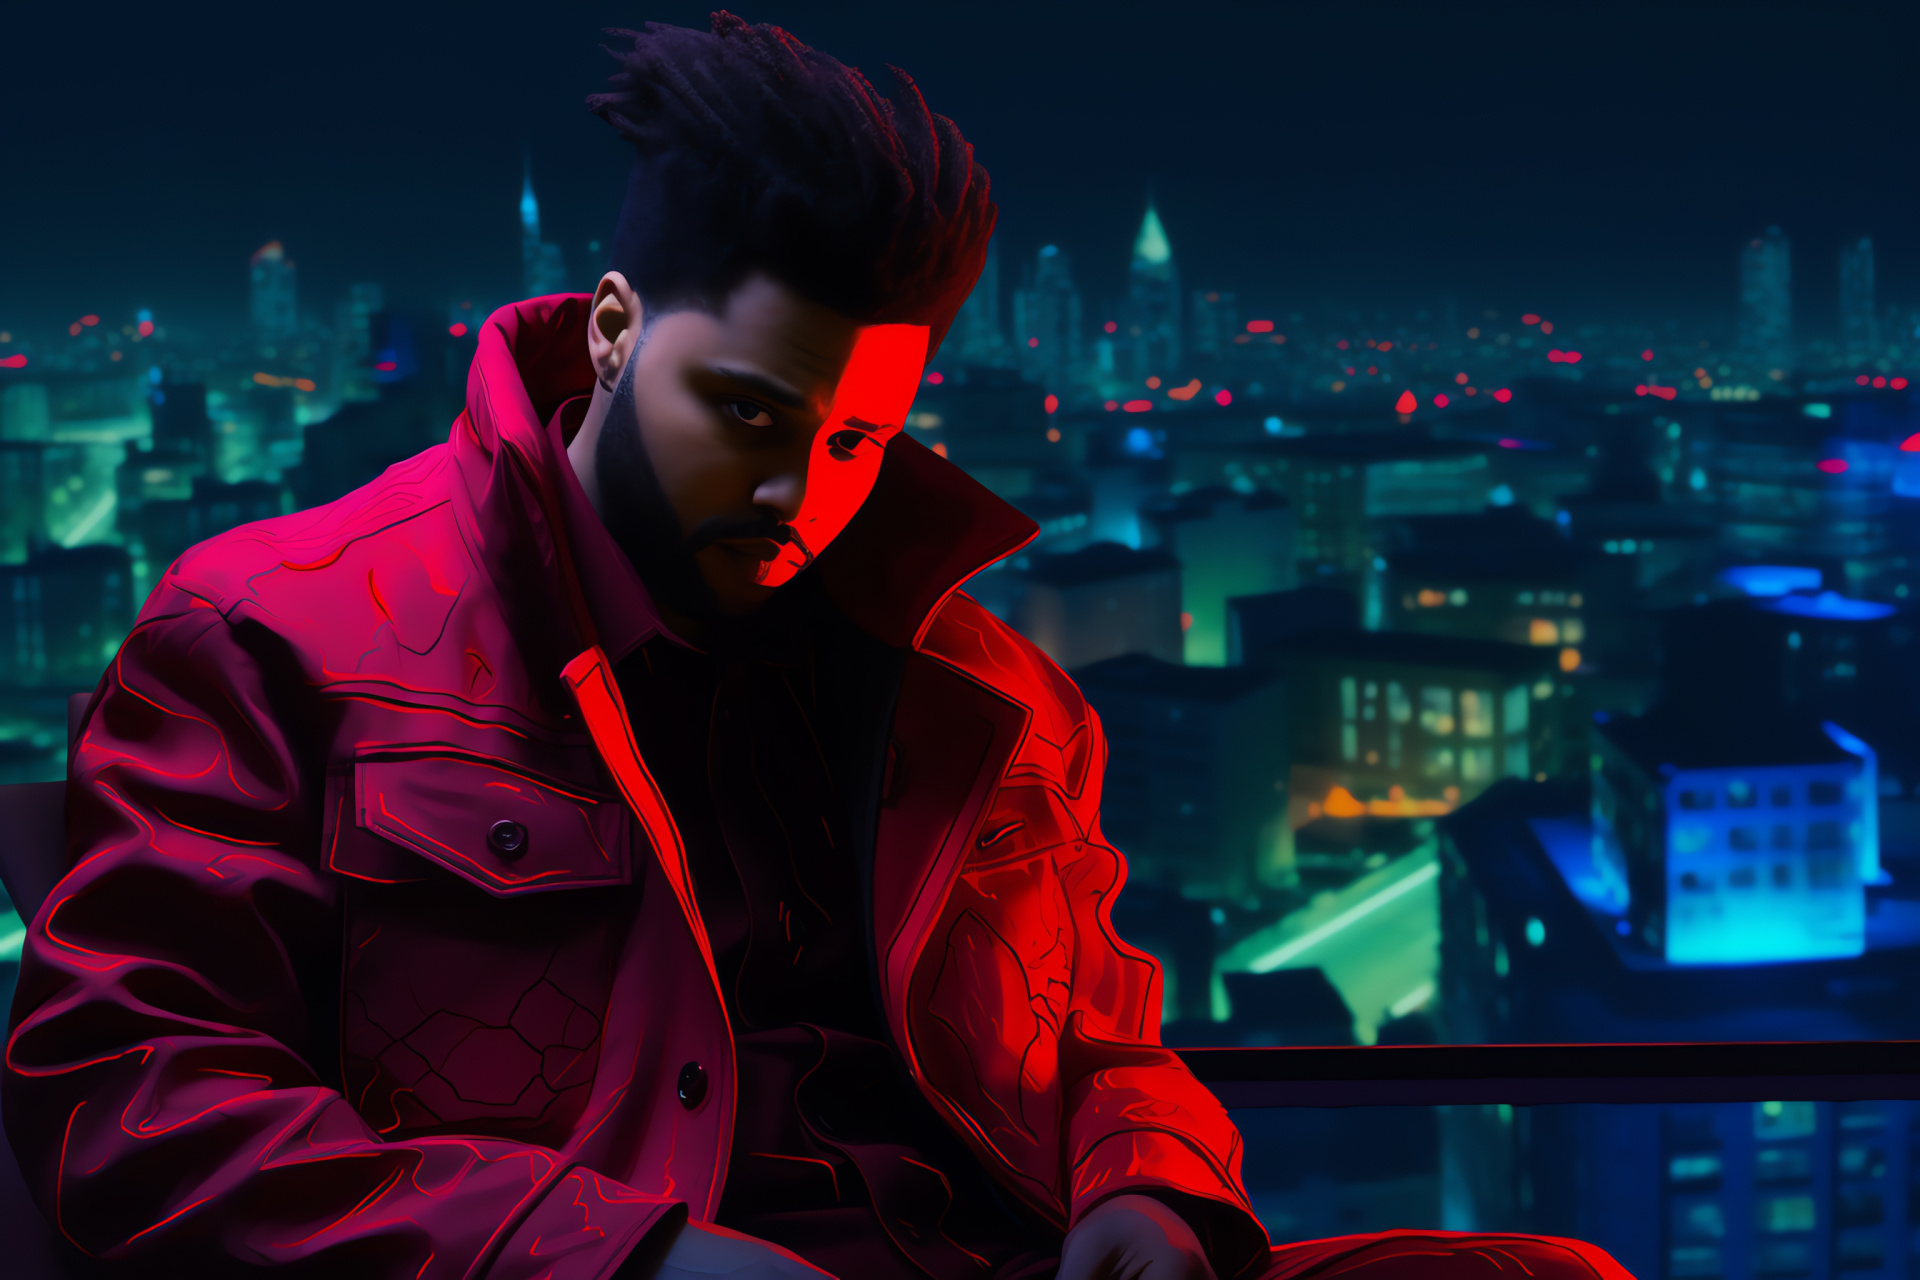 Celebrity The Weeknd, Illuminated urban setting, Buzzing metropolis, Elevated scene, Nighttime glimmer, HD Desktop Image